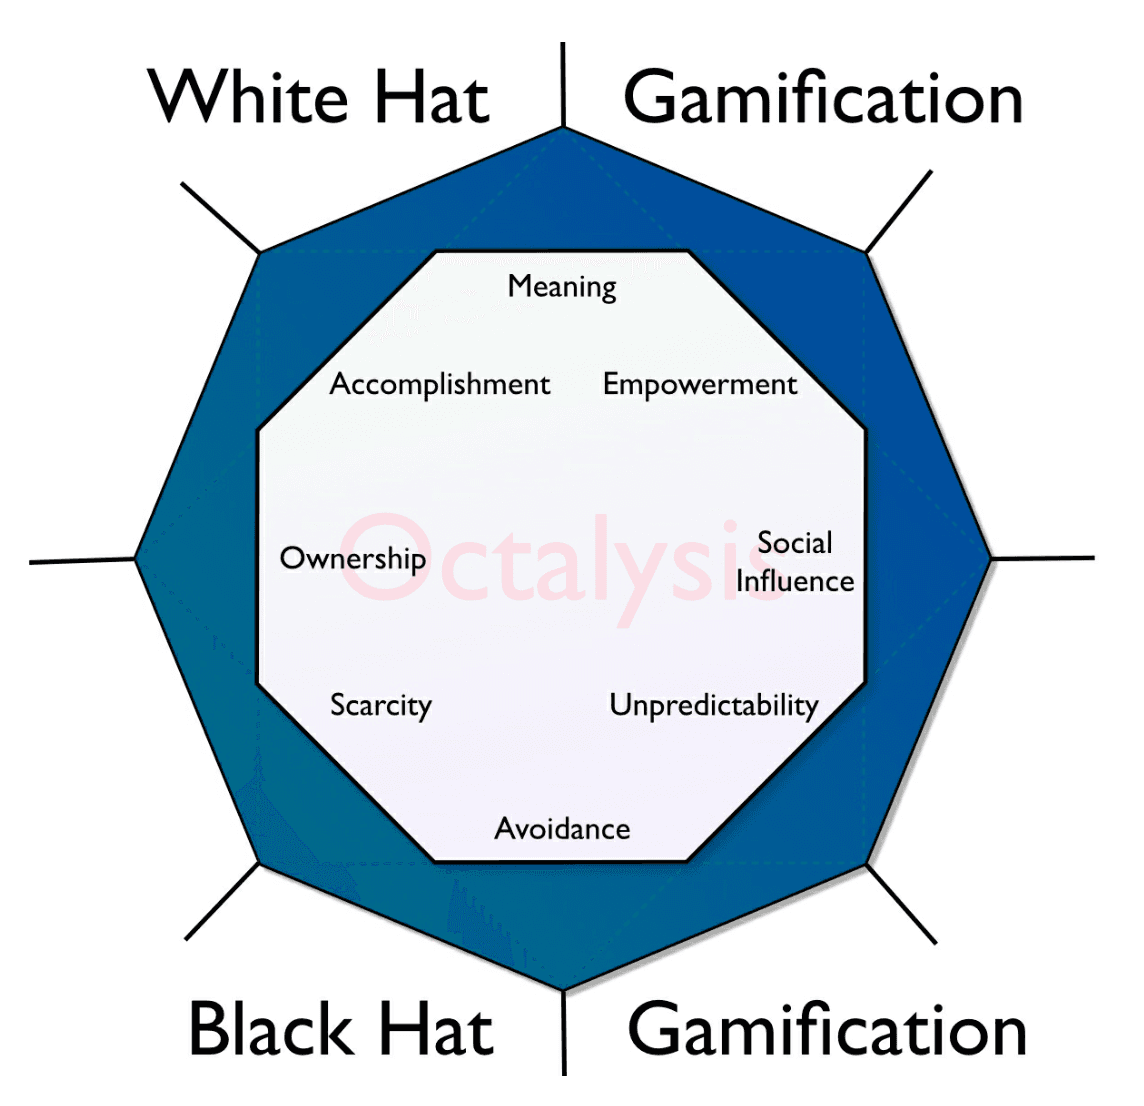 White Hat vs Black Hat Gamification